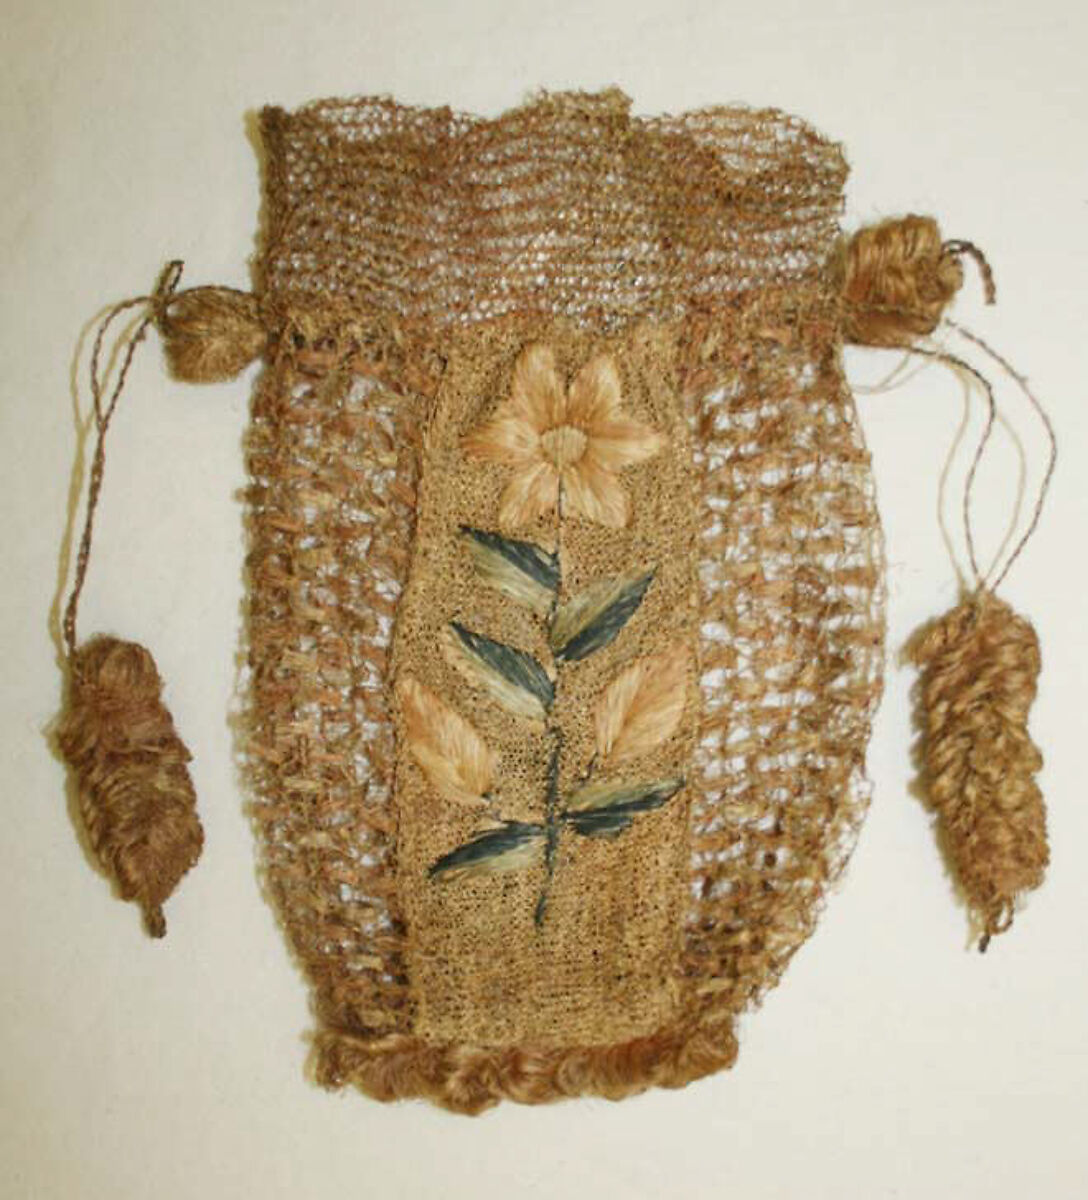 Drawstring bag, jute or hemp fiber, probably American 